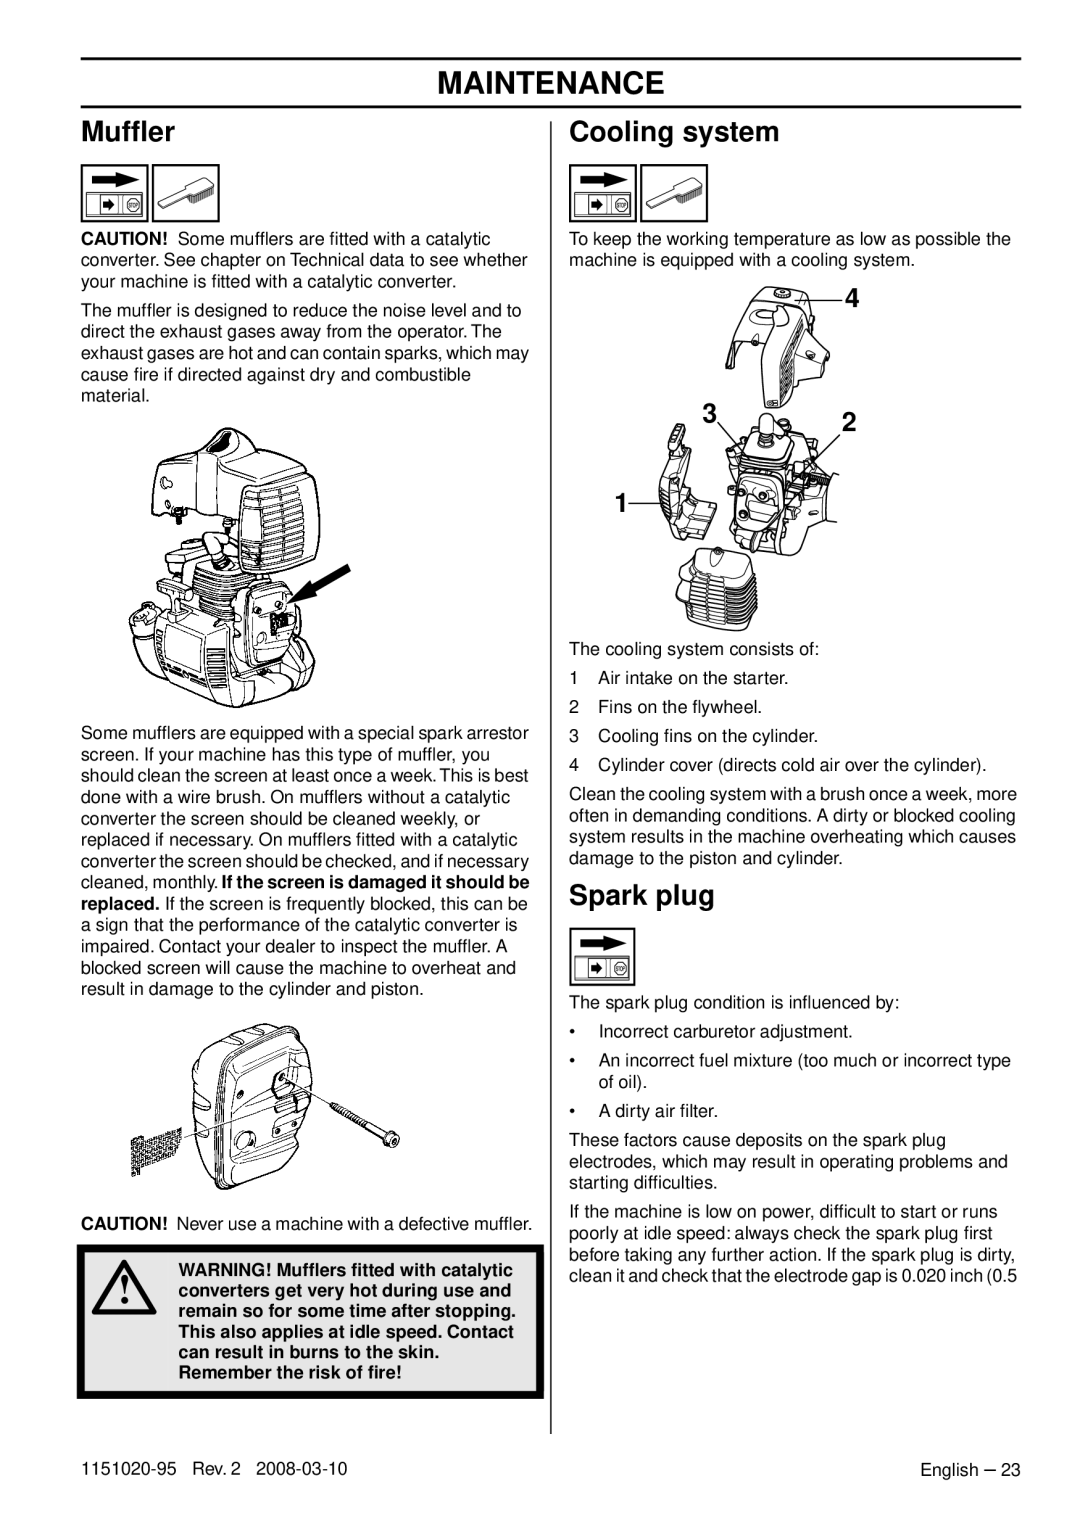 Husqvarna 326ES manual Mufﬂer, Cooling system, Spark plug, Remember the risk of ﬁre, Maintenance 